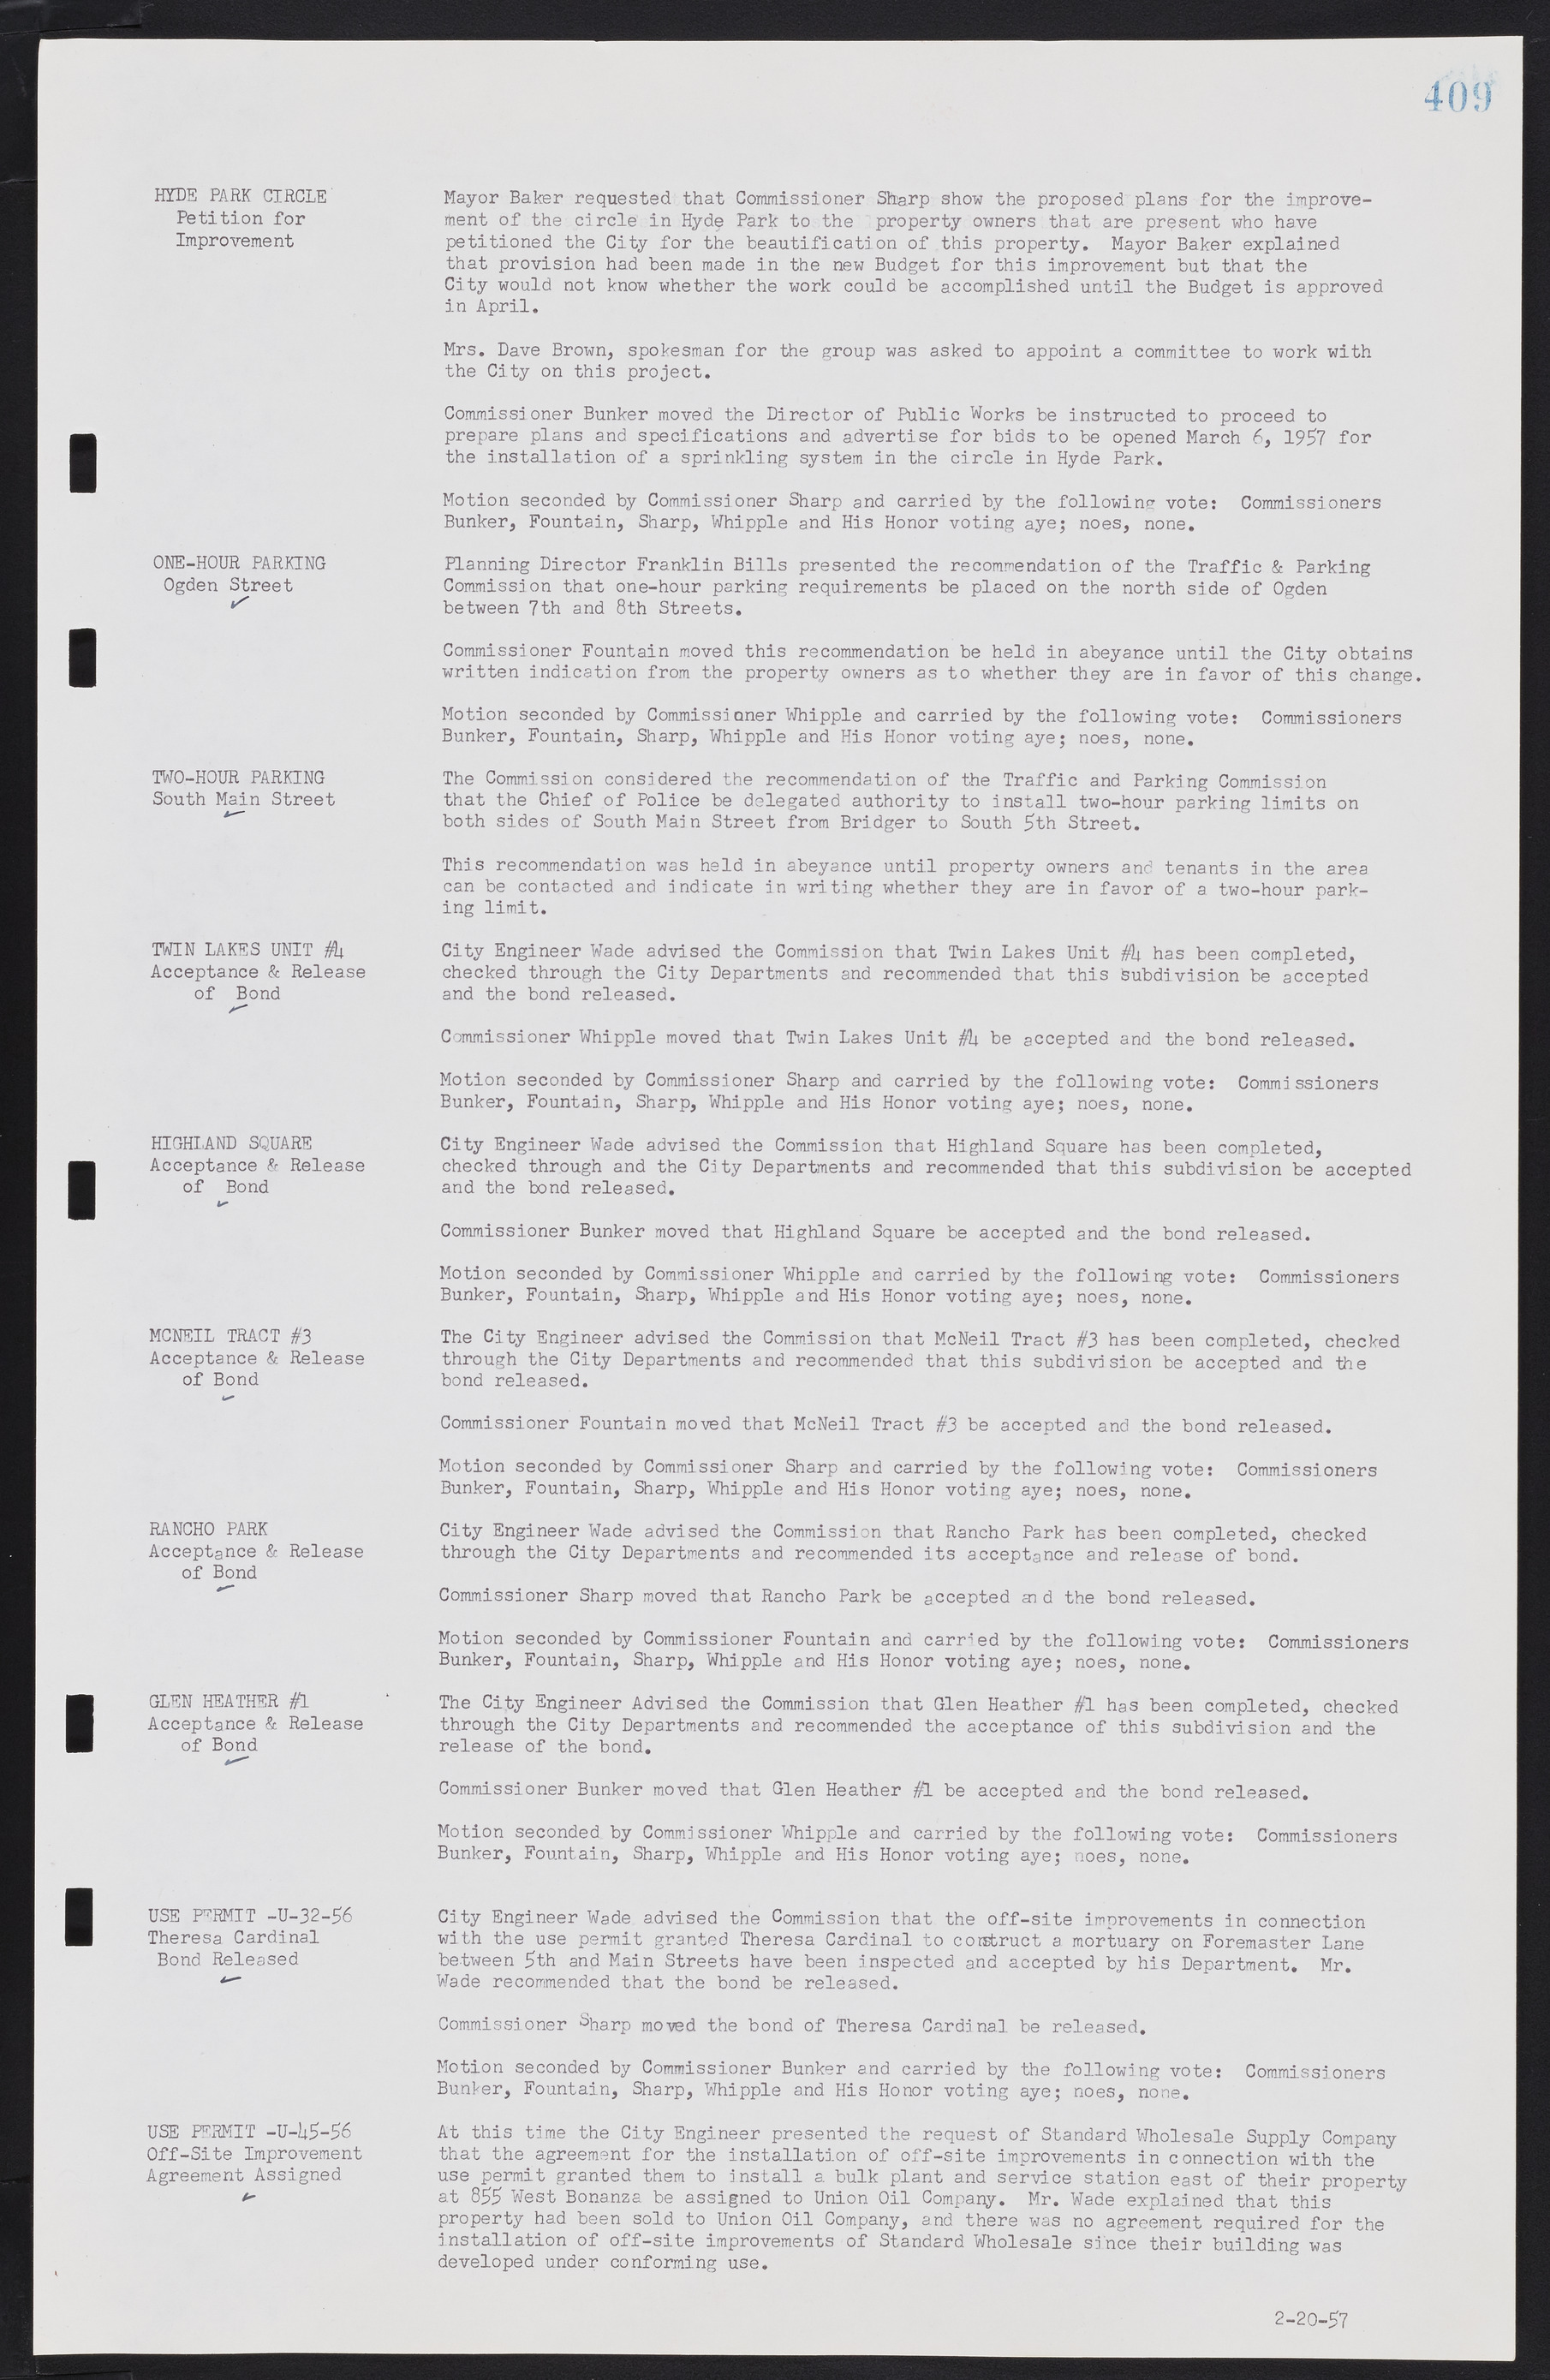 Las Vegas City Commission Minutes, September 21, 1955 to November 20, 1957, lvc000010-429